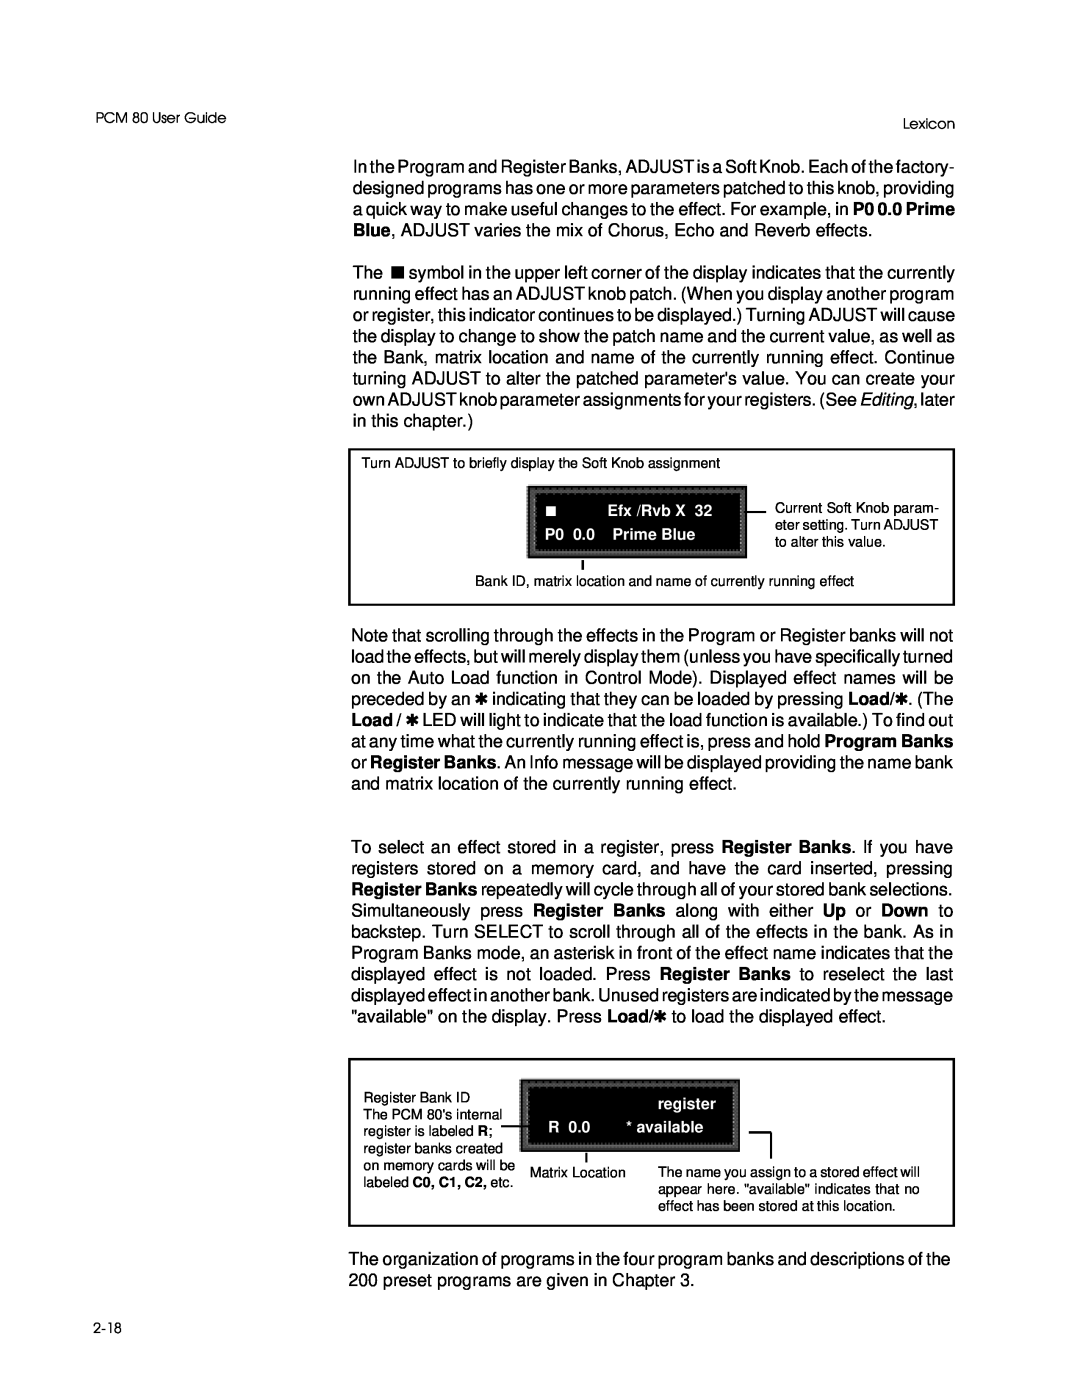 Lexicon PCM 80 manual Efx /Rvb X P0 0.0 Prime Blue, register, available 